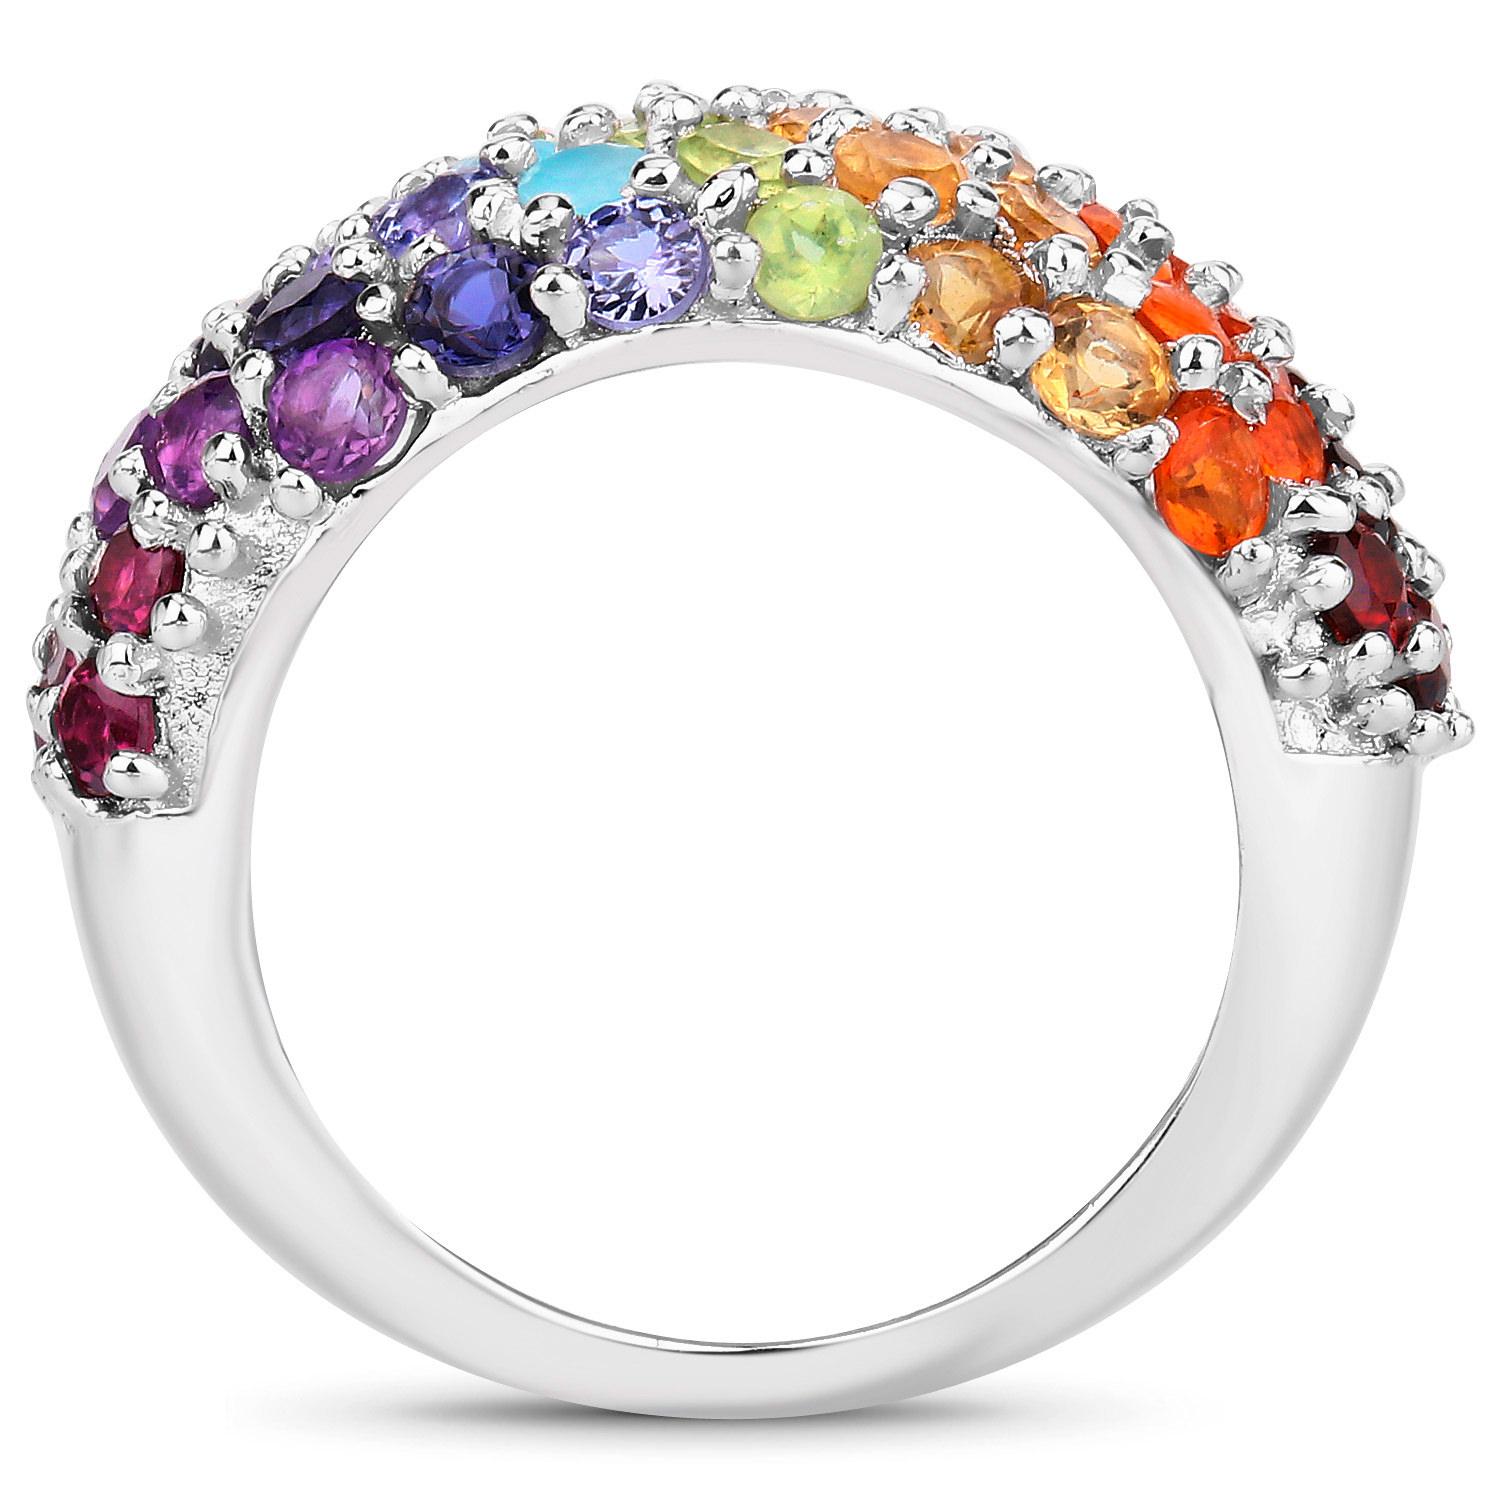 Multicolor Gemstones Cluster Ring 62 Gemstones 4.25 Carats In Excellent Condition For Sale In Laguna Niguel, CA